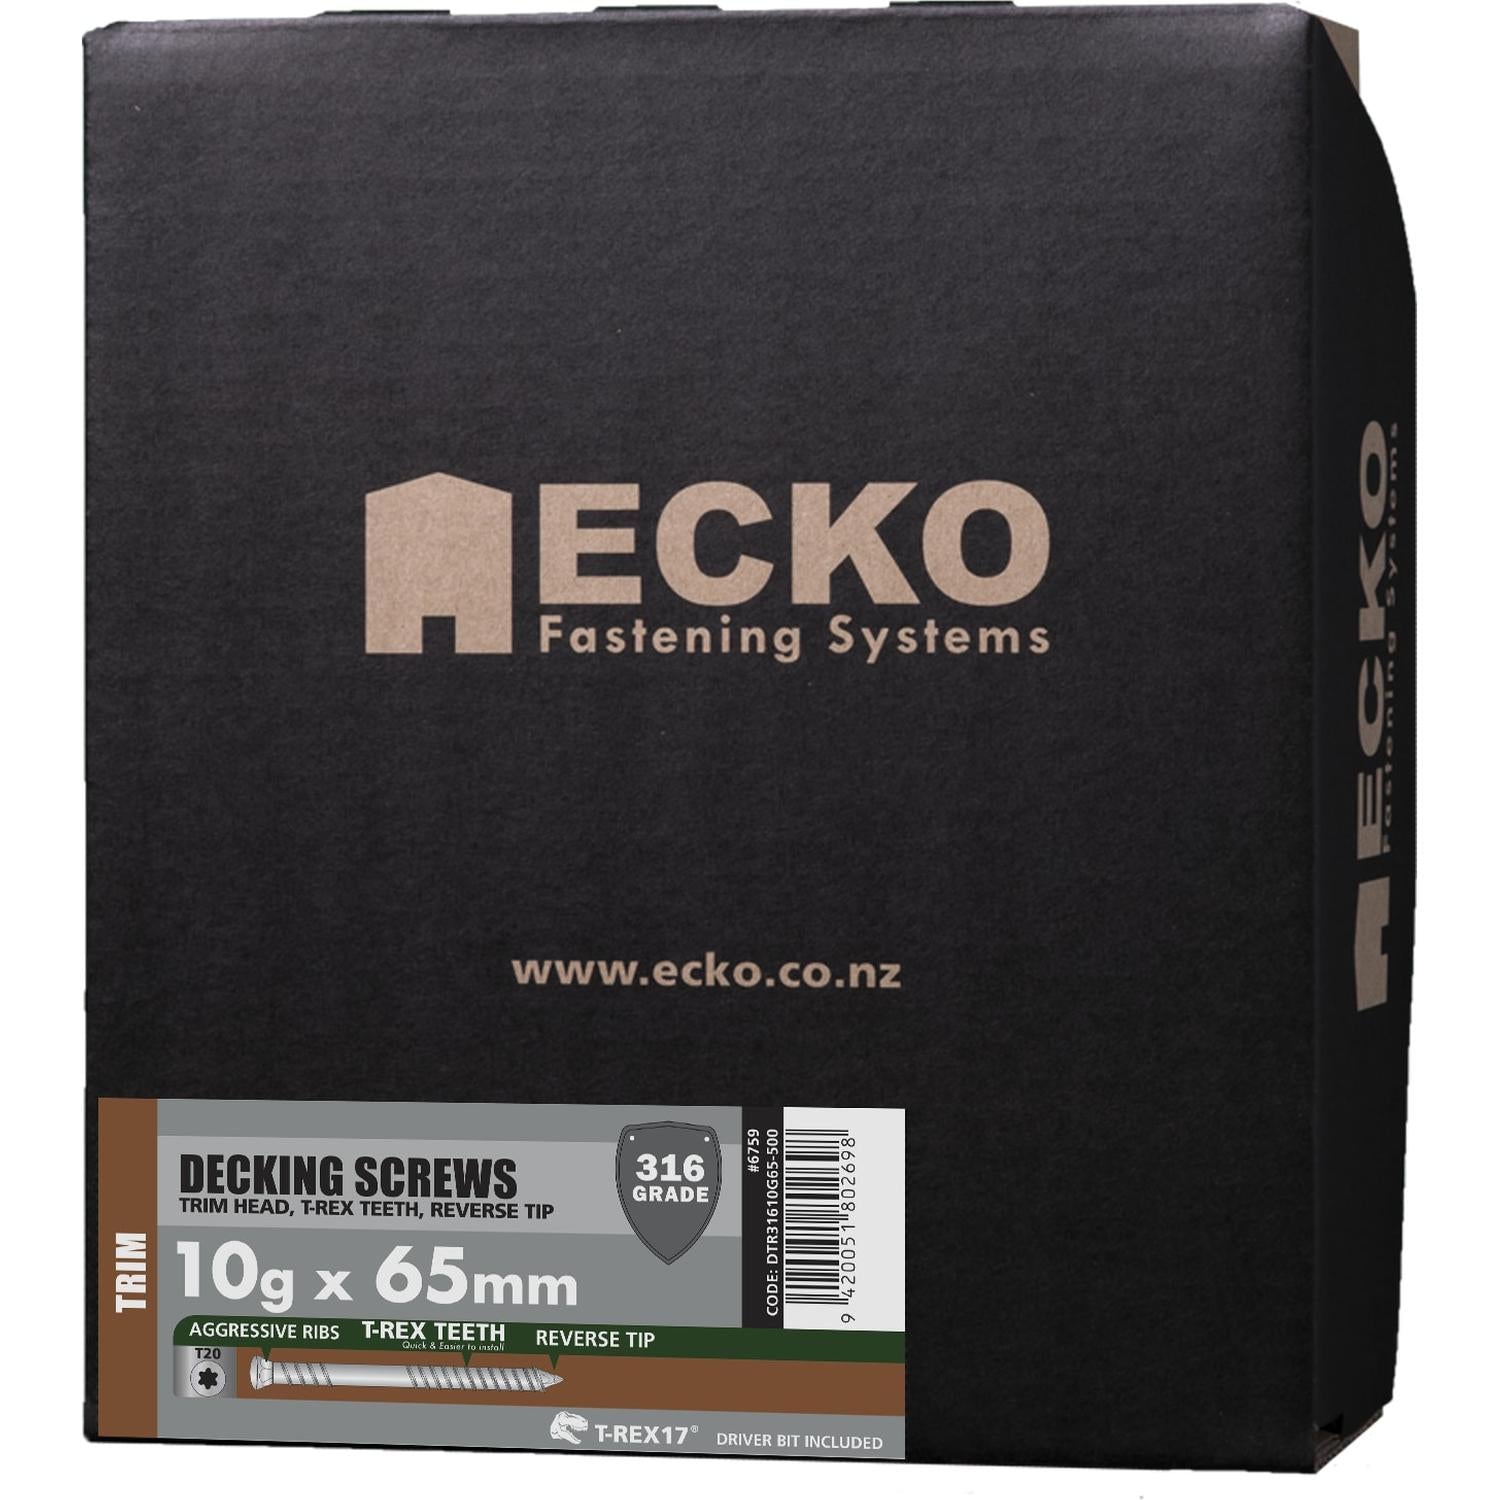 Ecko T-Rex17 Trim Head Decking Screws 10G X 65Mm Stainless Steel 316 (500 Box)